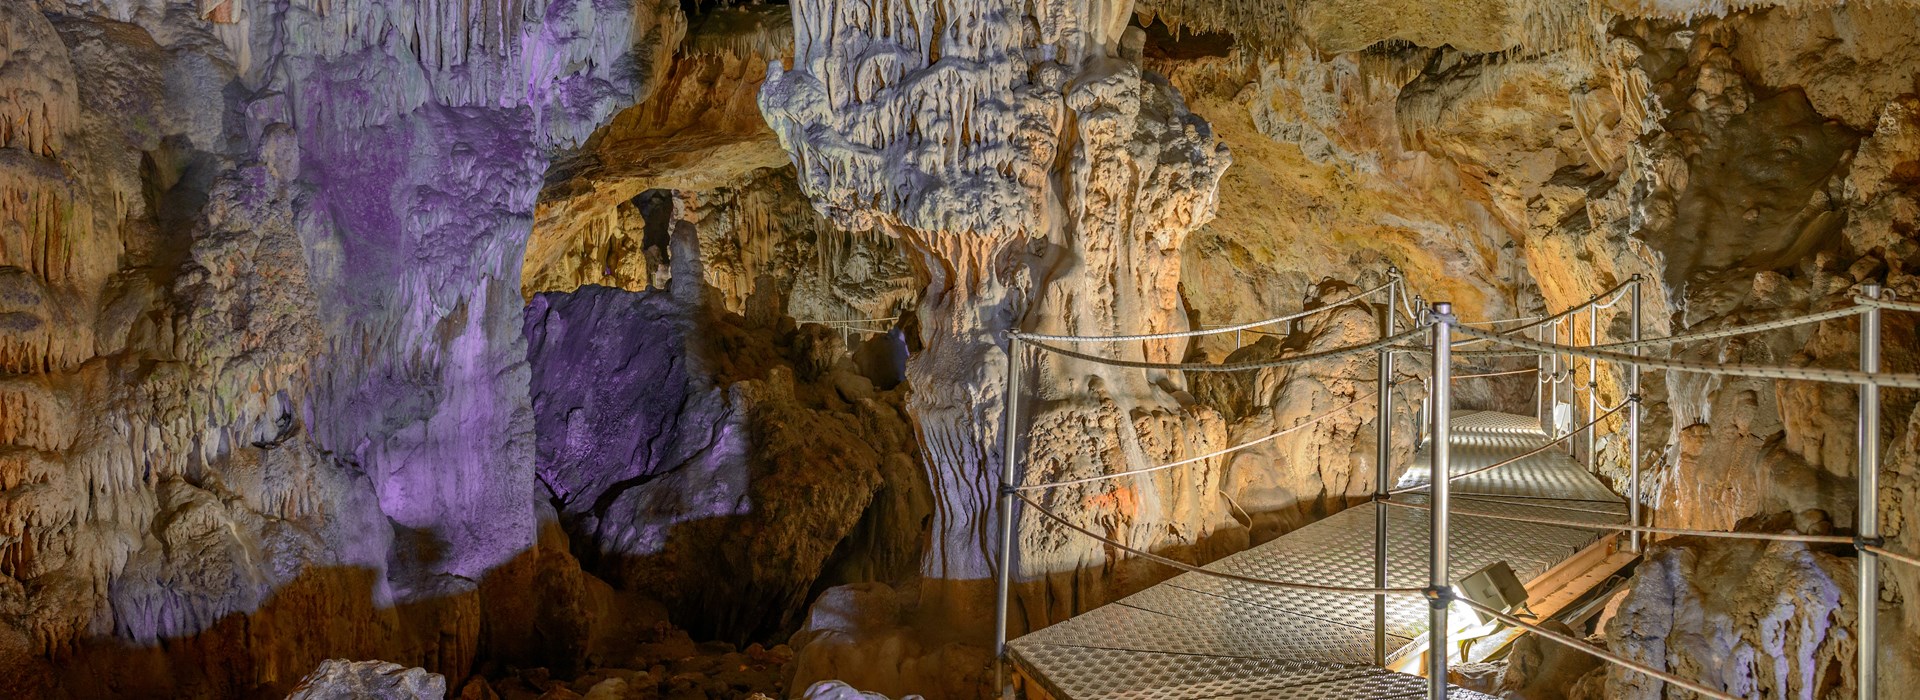 Visiter La grotte de Sfendoni - Crète